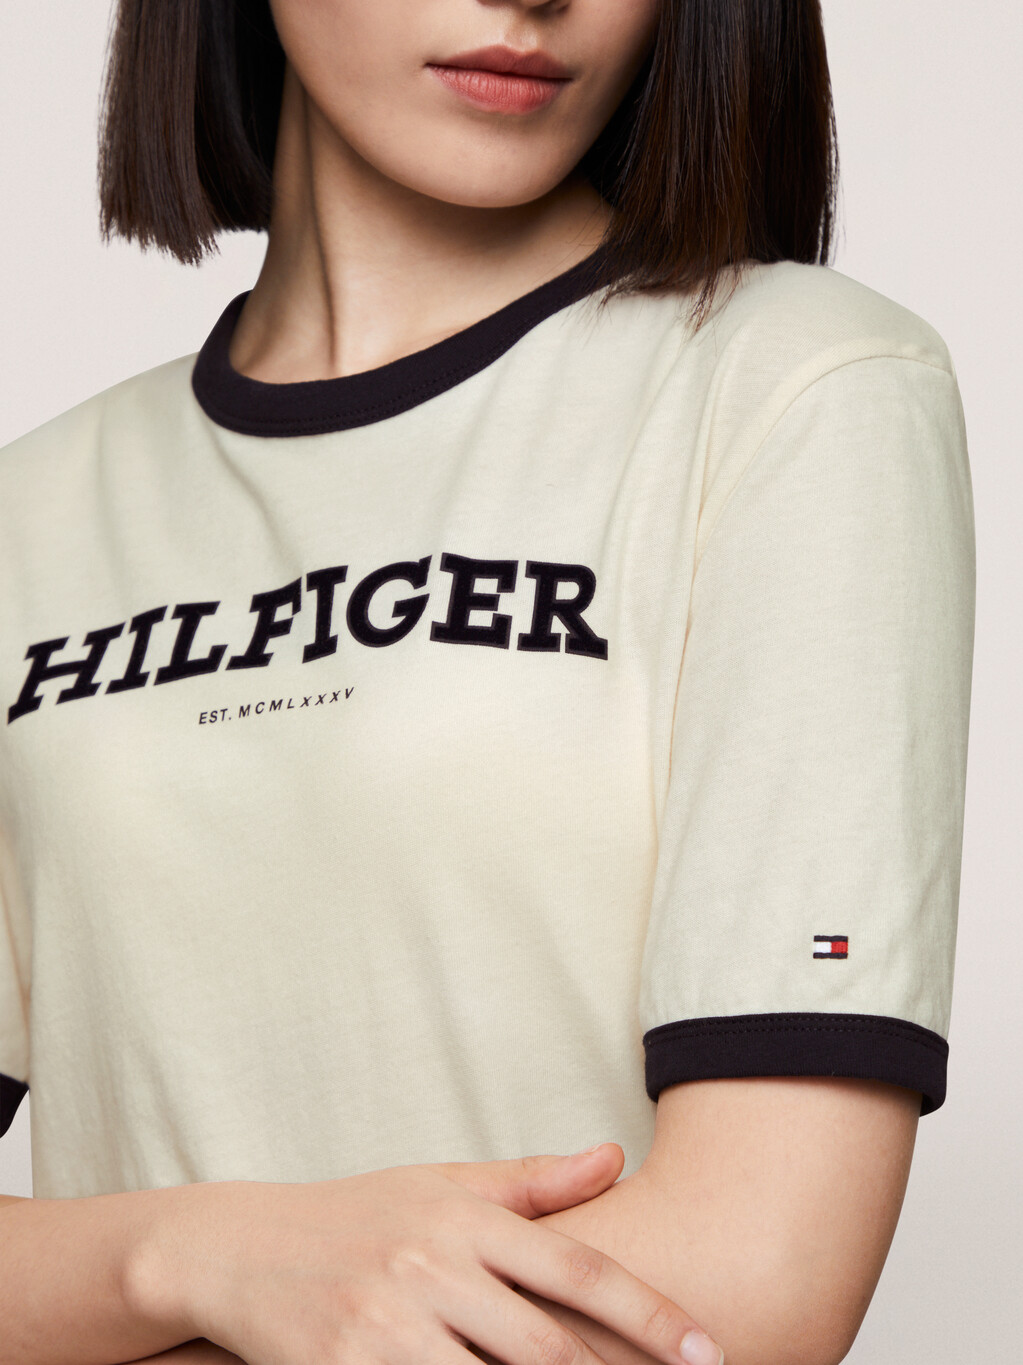 Hilfiger Monotype Flocked Logo T-Shirt, Calico, hi-res